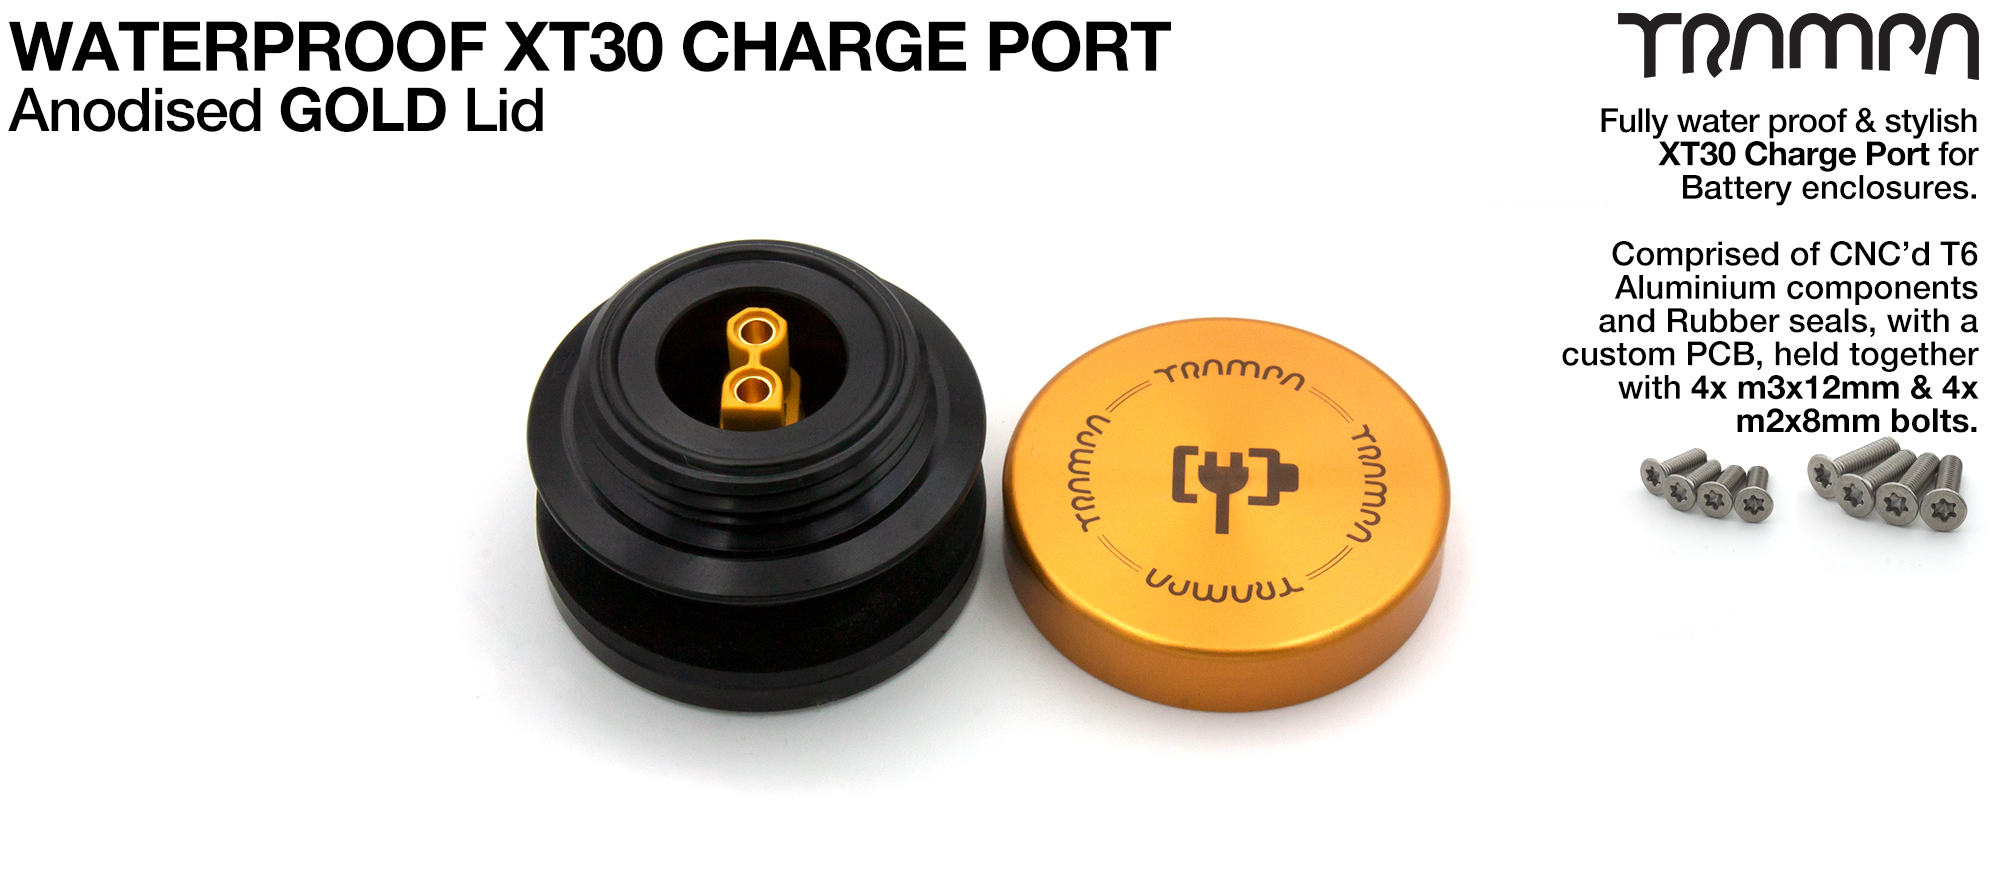 ORRSOM GT XT30 WATERPROOF Charge Port - GOLD